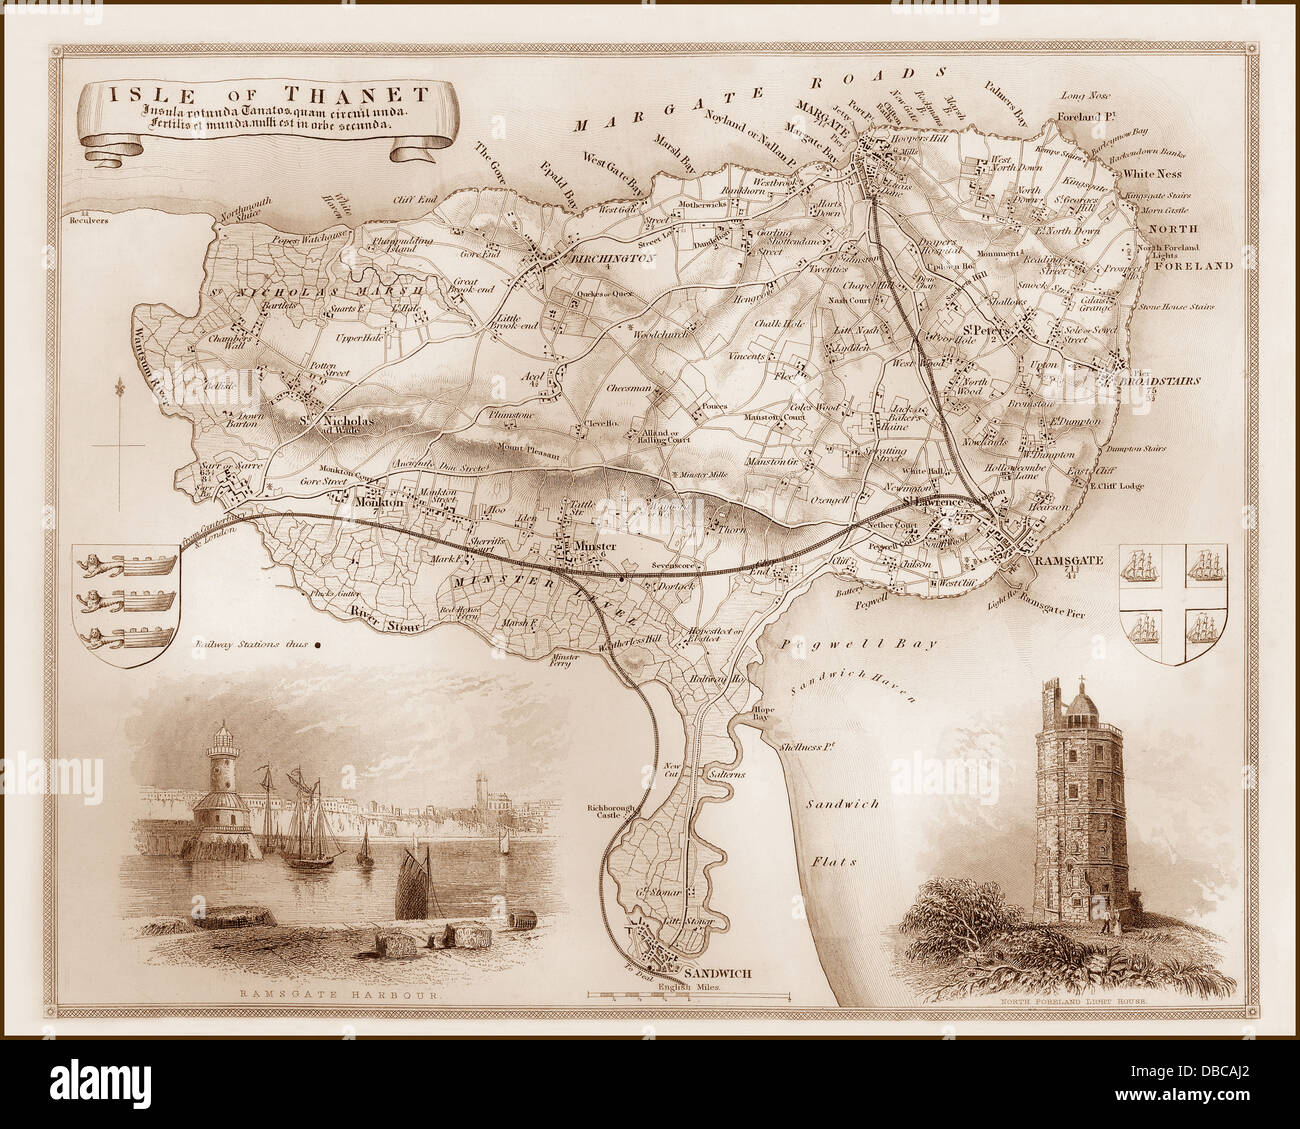 1840 Victorian mapa de isla de Thanet Foto de stock